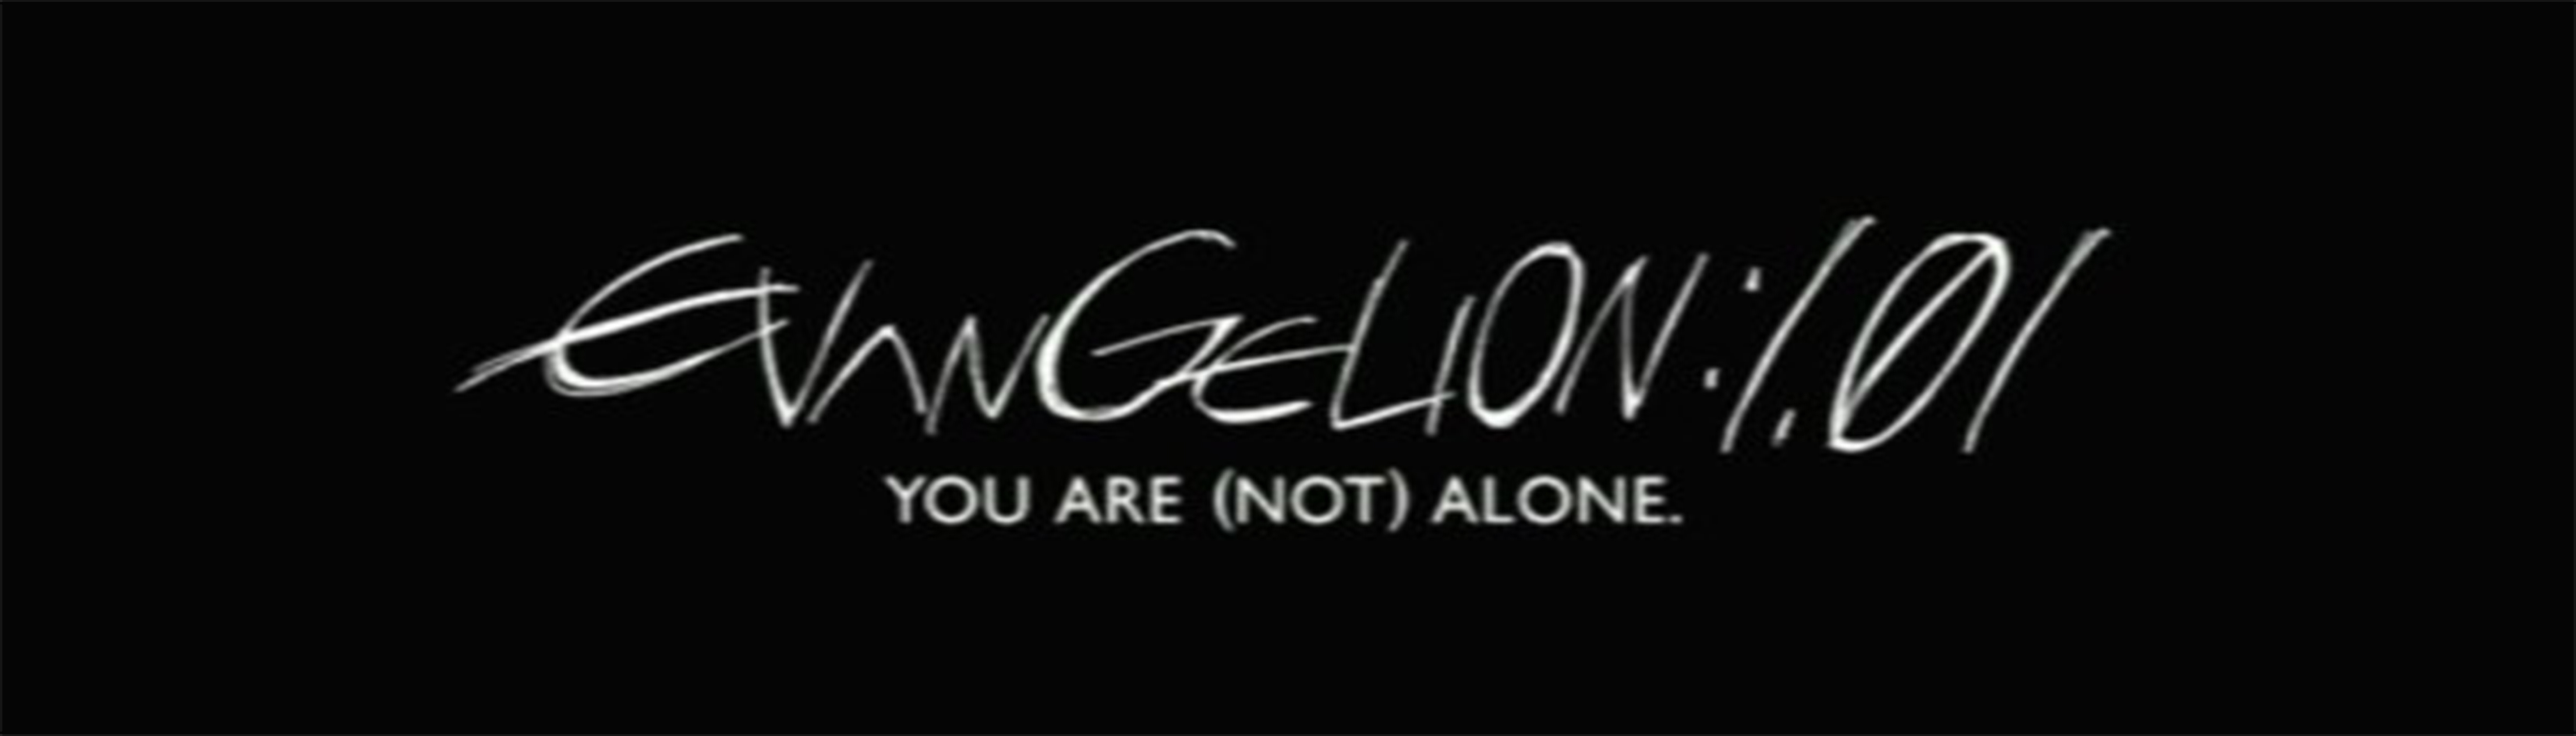 دانلود انیمه کارتونی Evangelion 1 You Are Not Alone